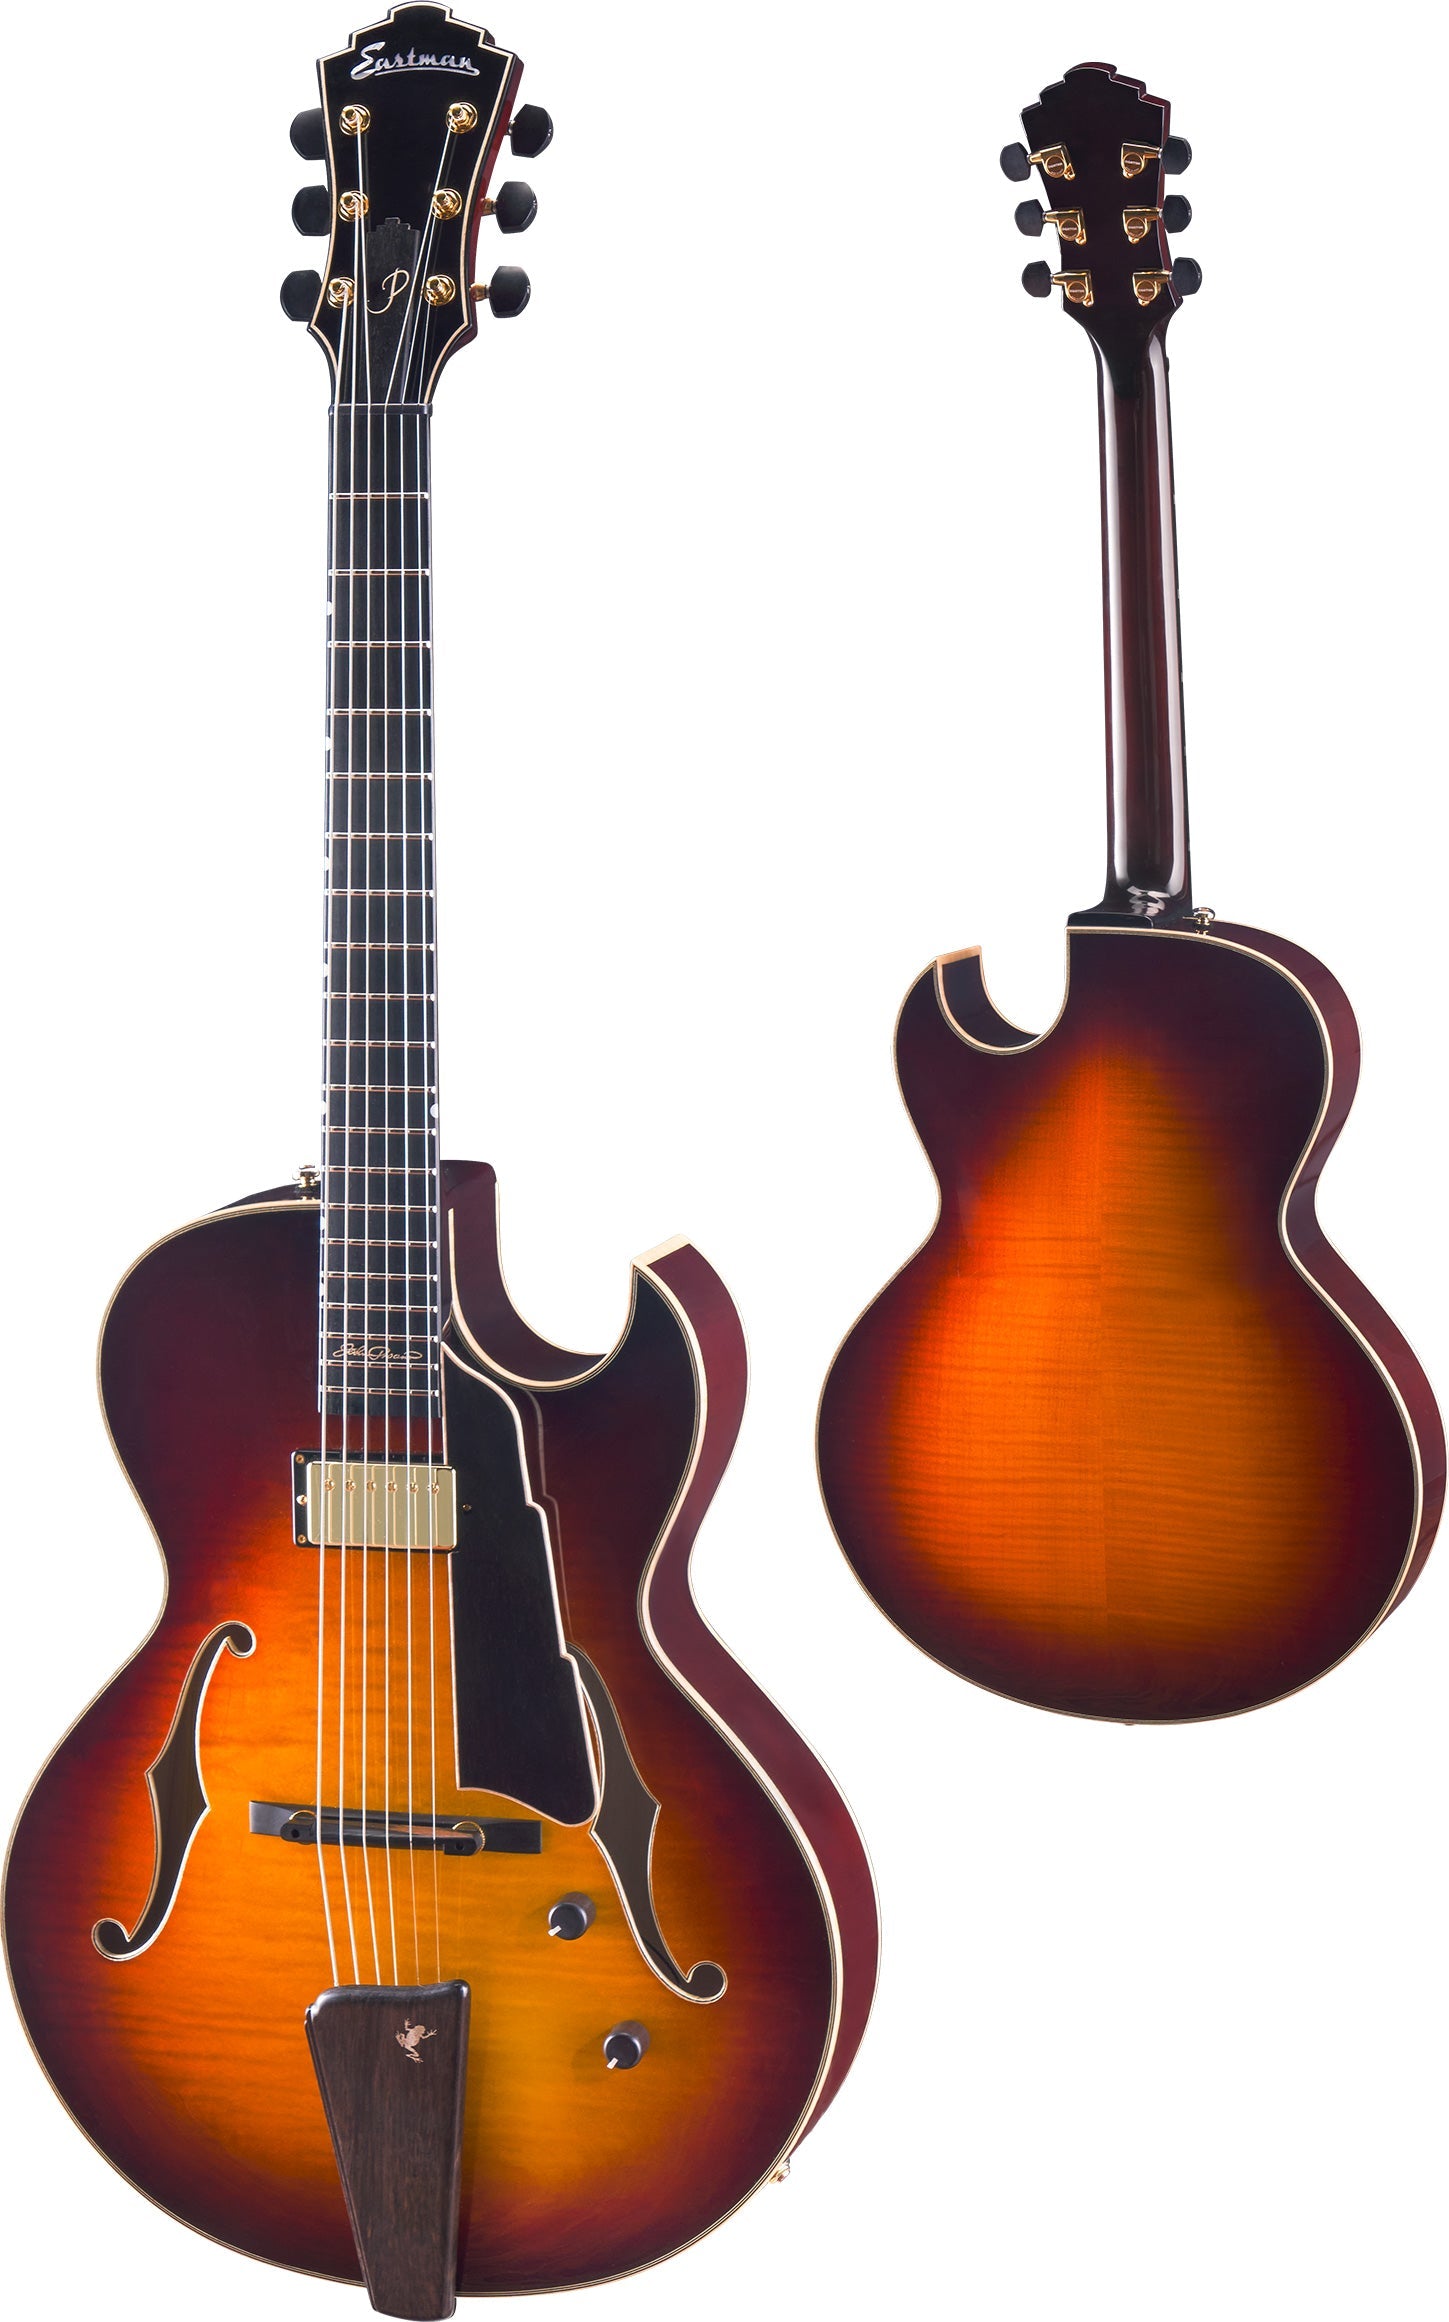 Eastman AR480ce John Pisano 30th Anniversary, Electric Guitar for sale at Richards Guitars.